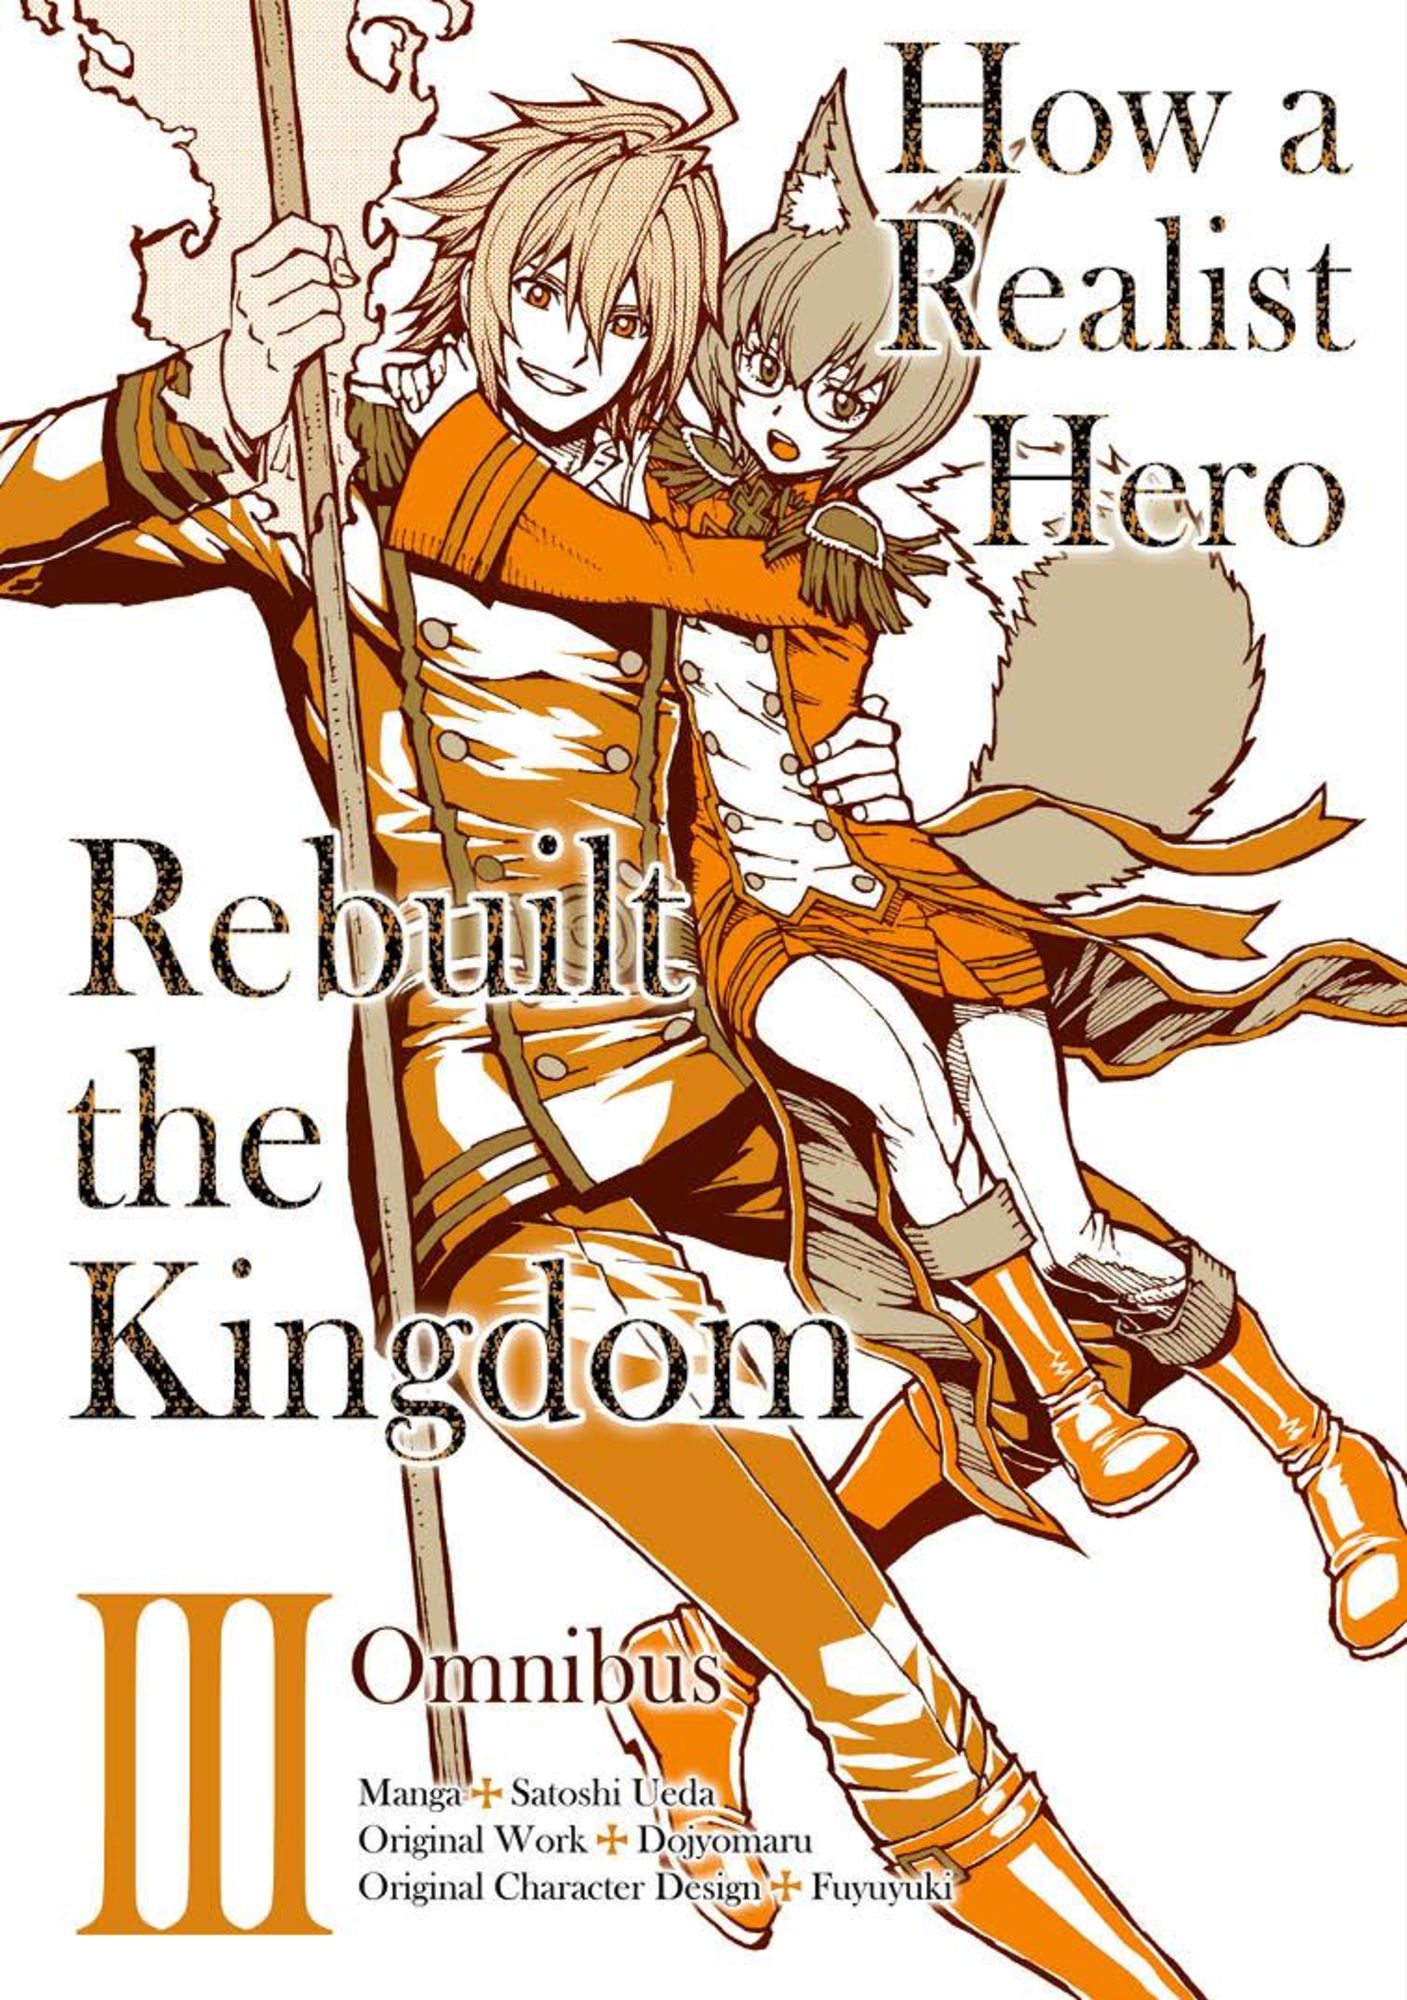 How a Realist Hero Rebuilt the Kingdom - Wikipedia